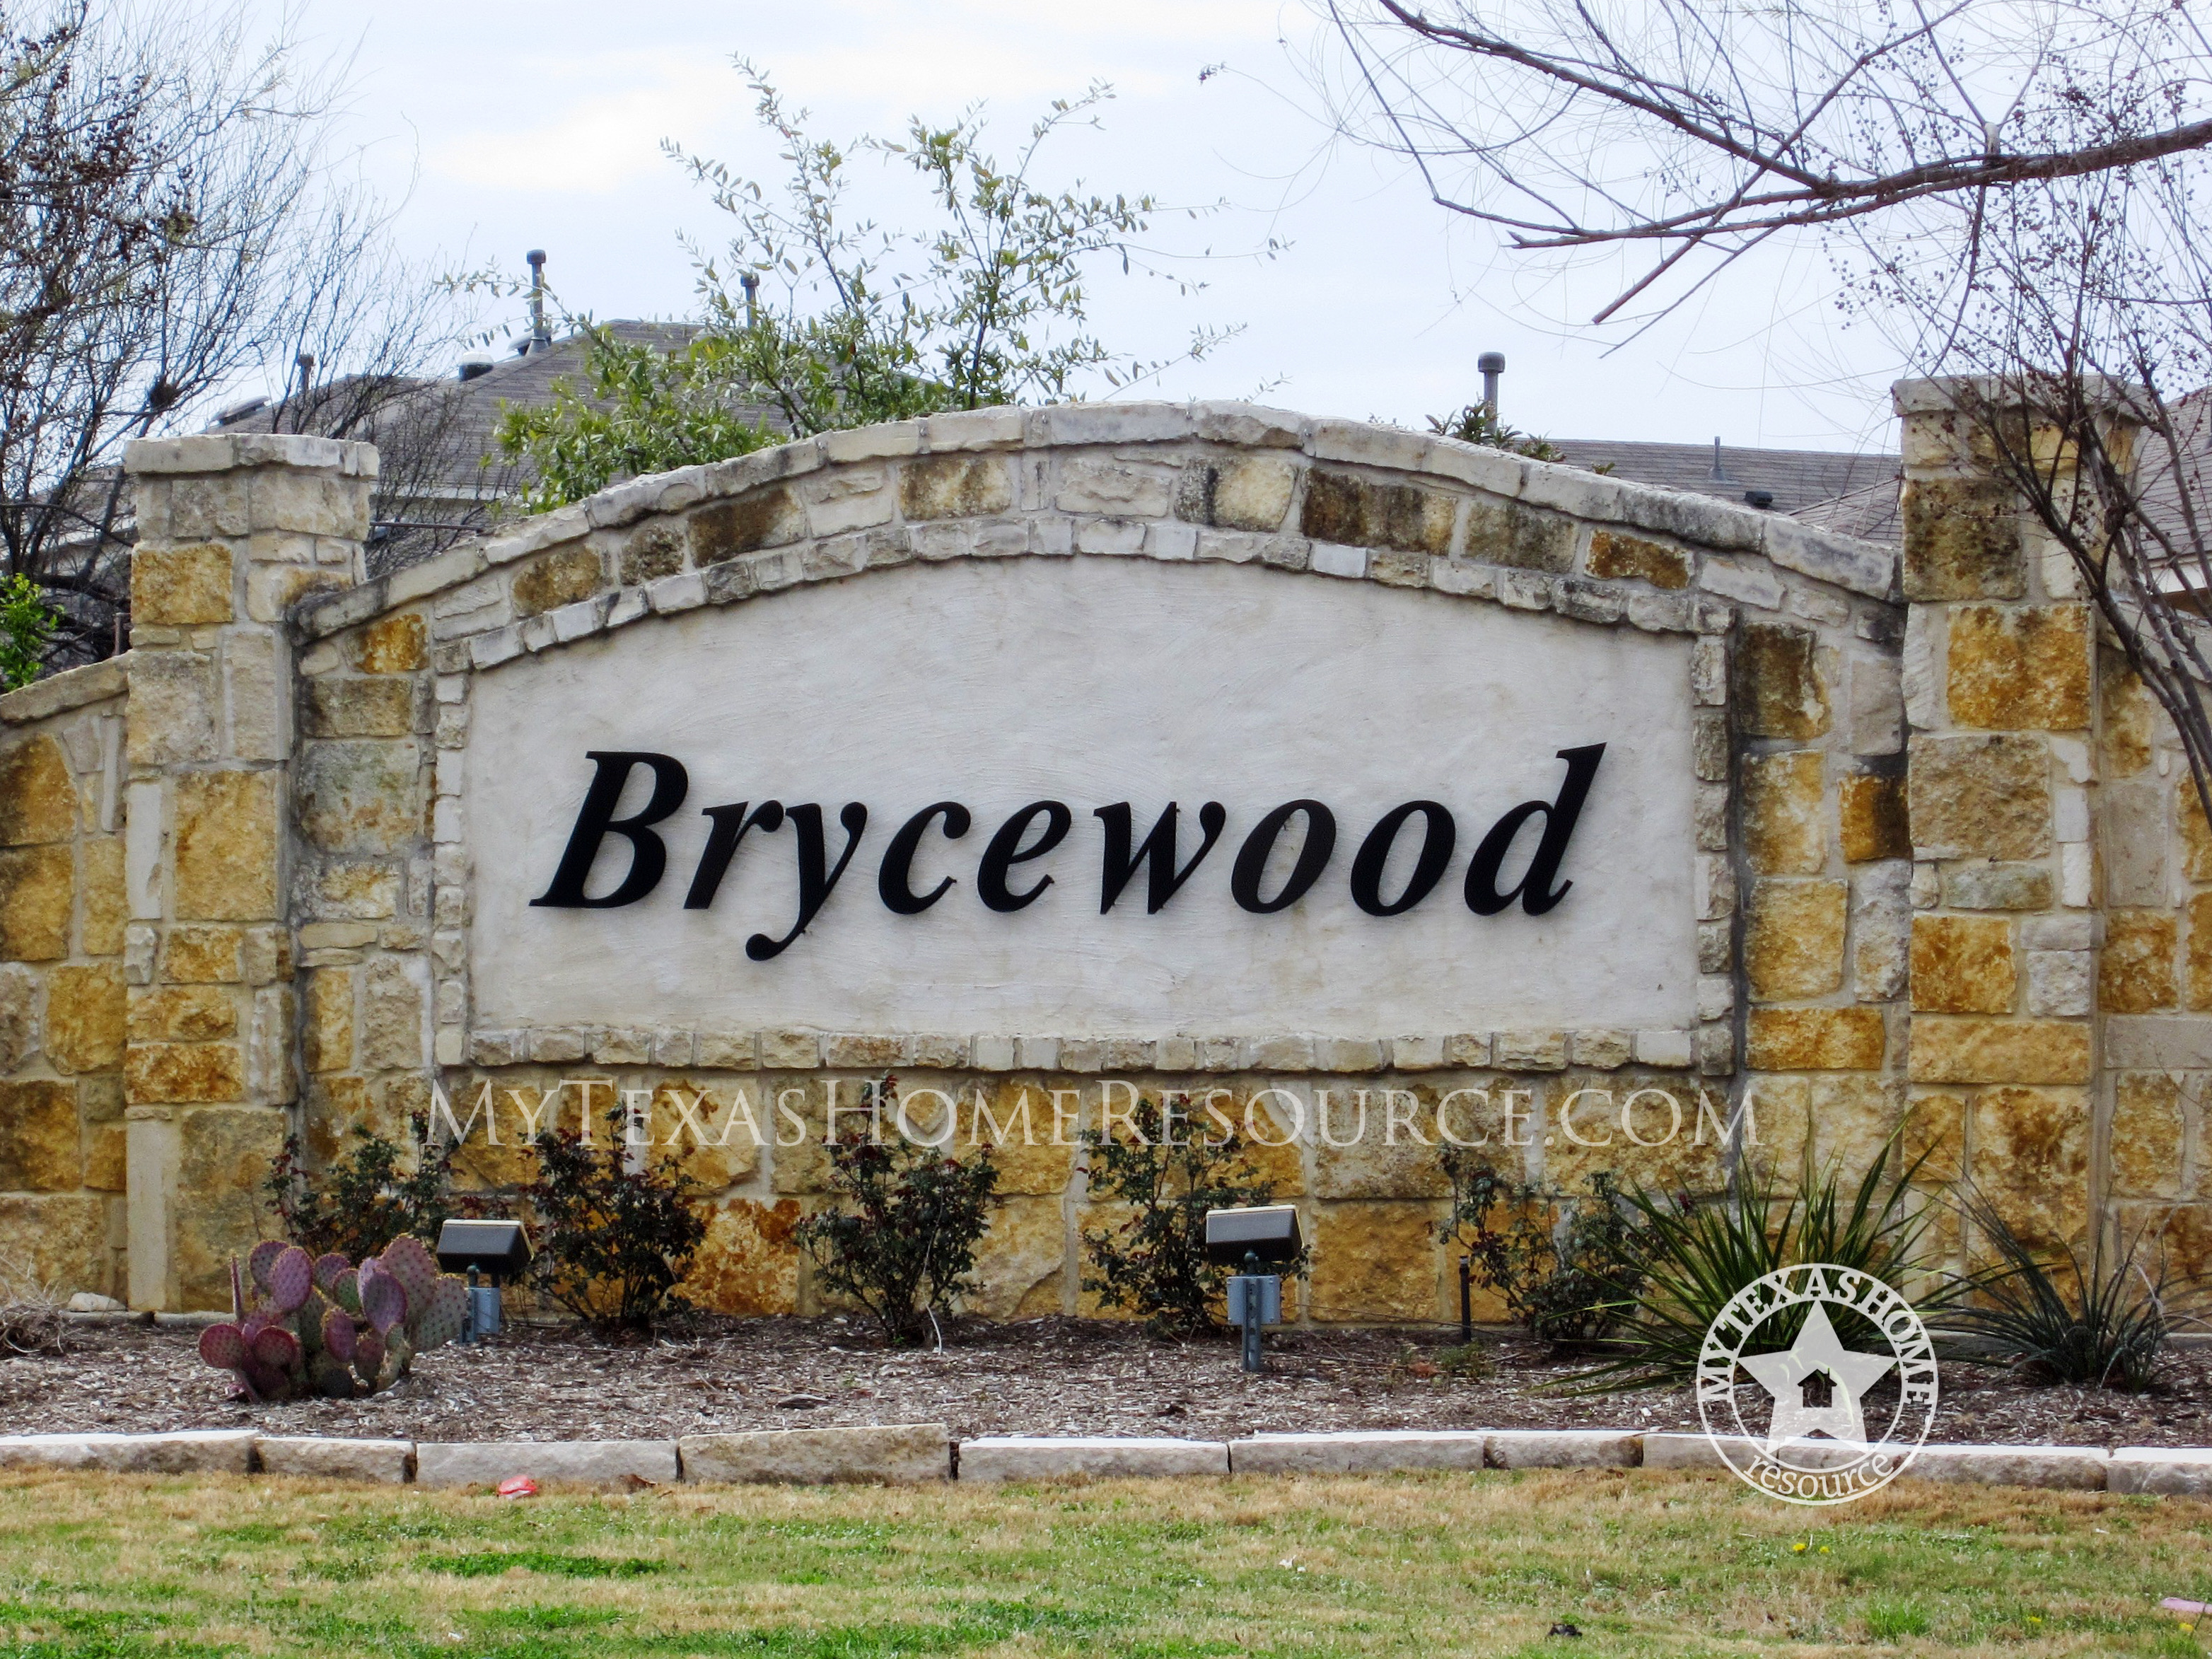 Brycewood社区